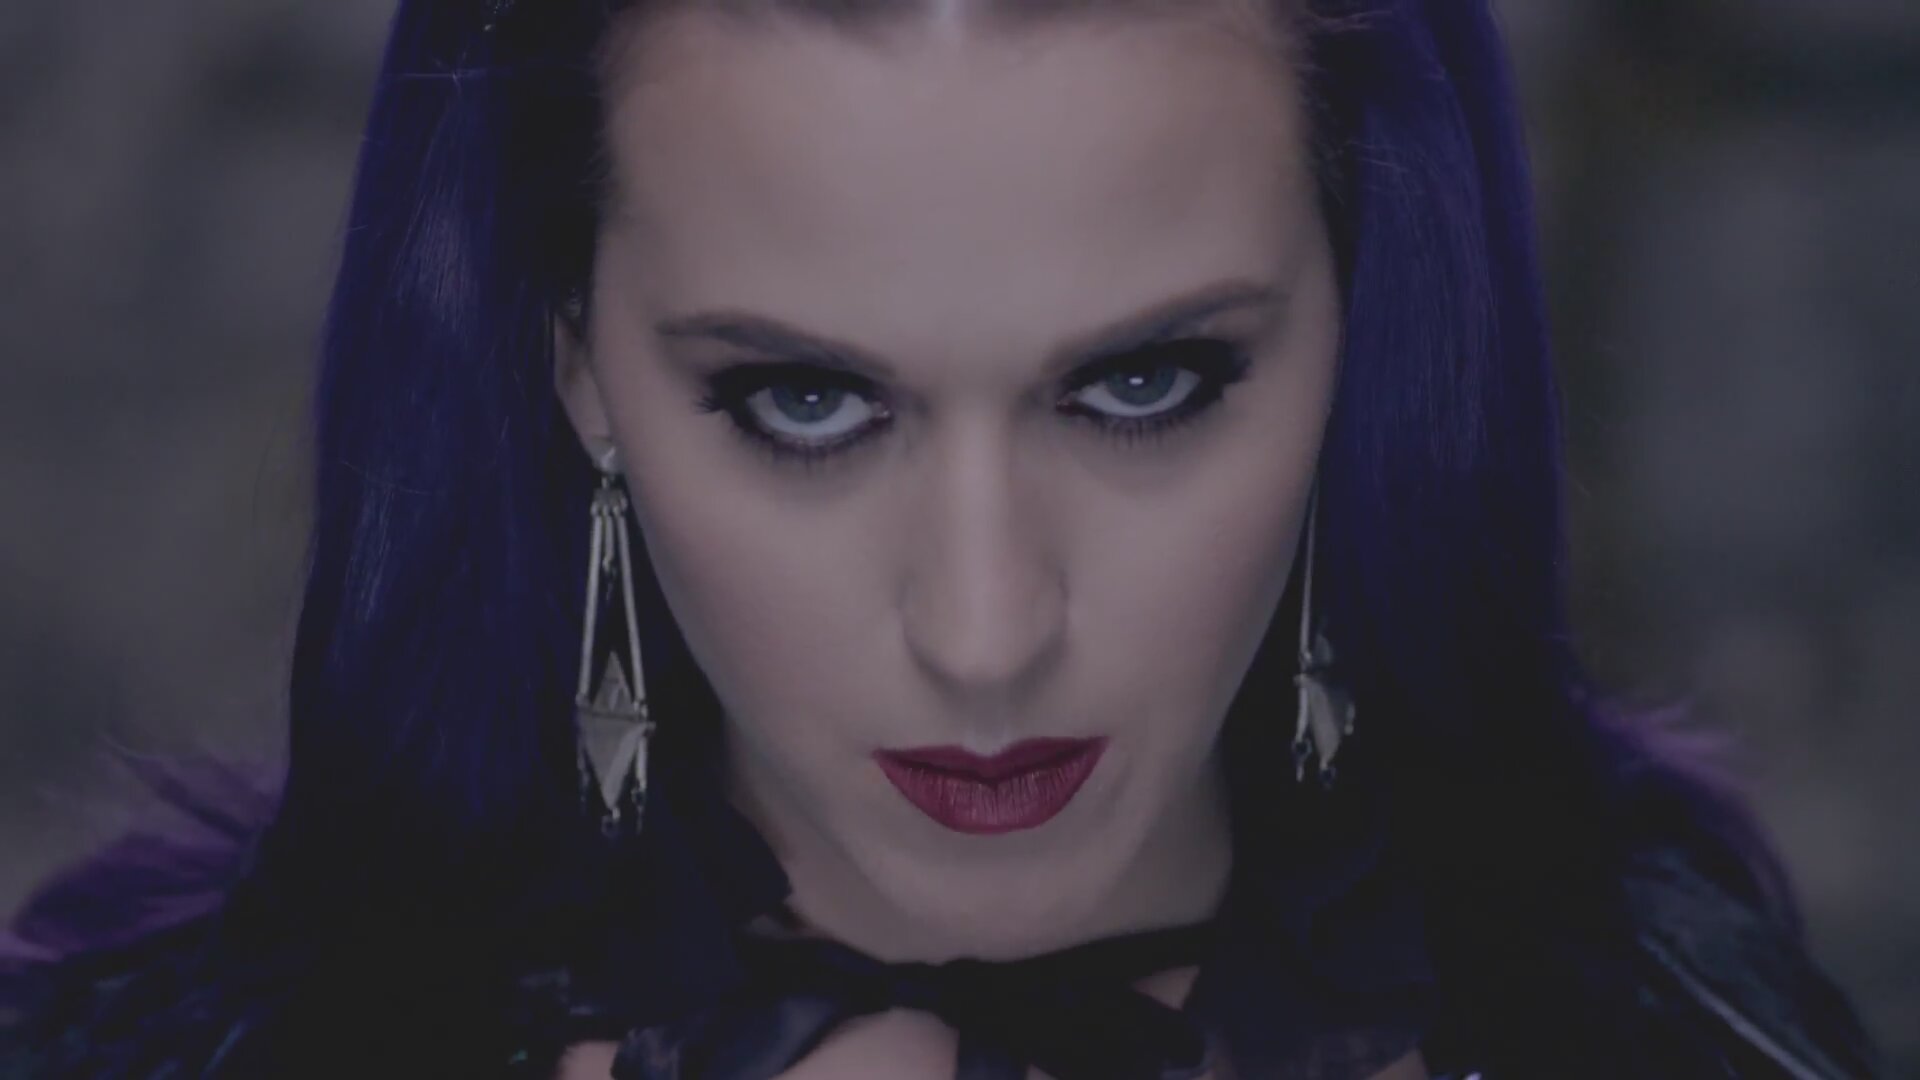 Wide Awake by Katy Perry on Amazon Music - Amazoncom